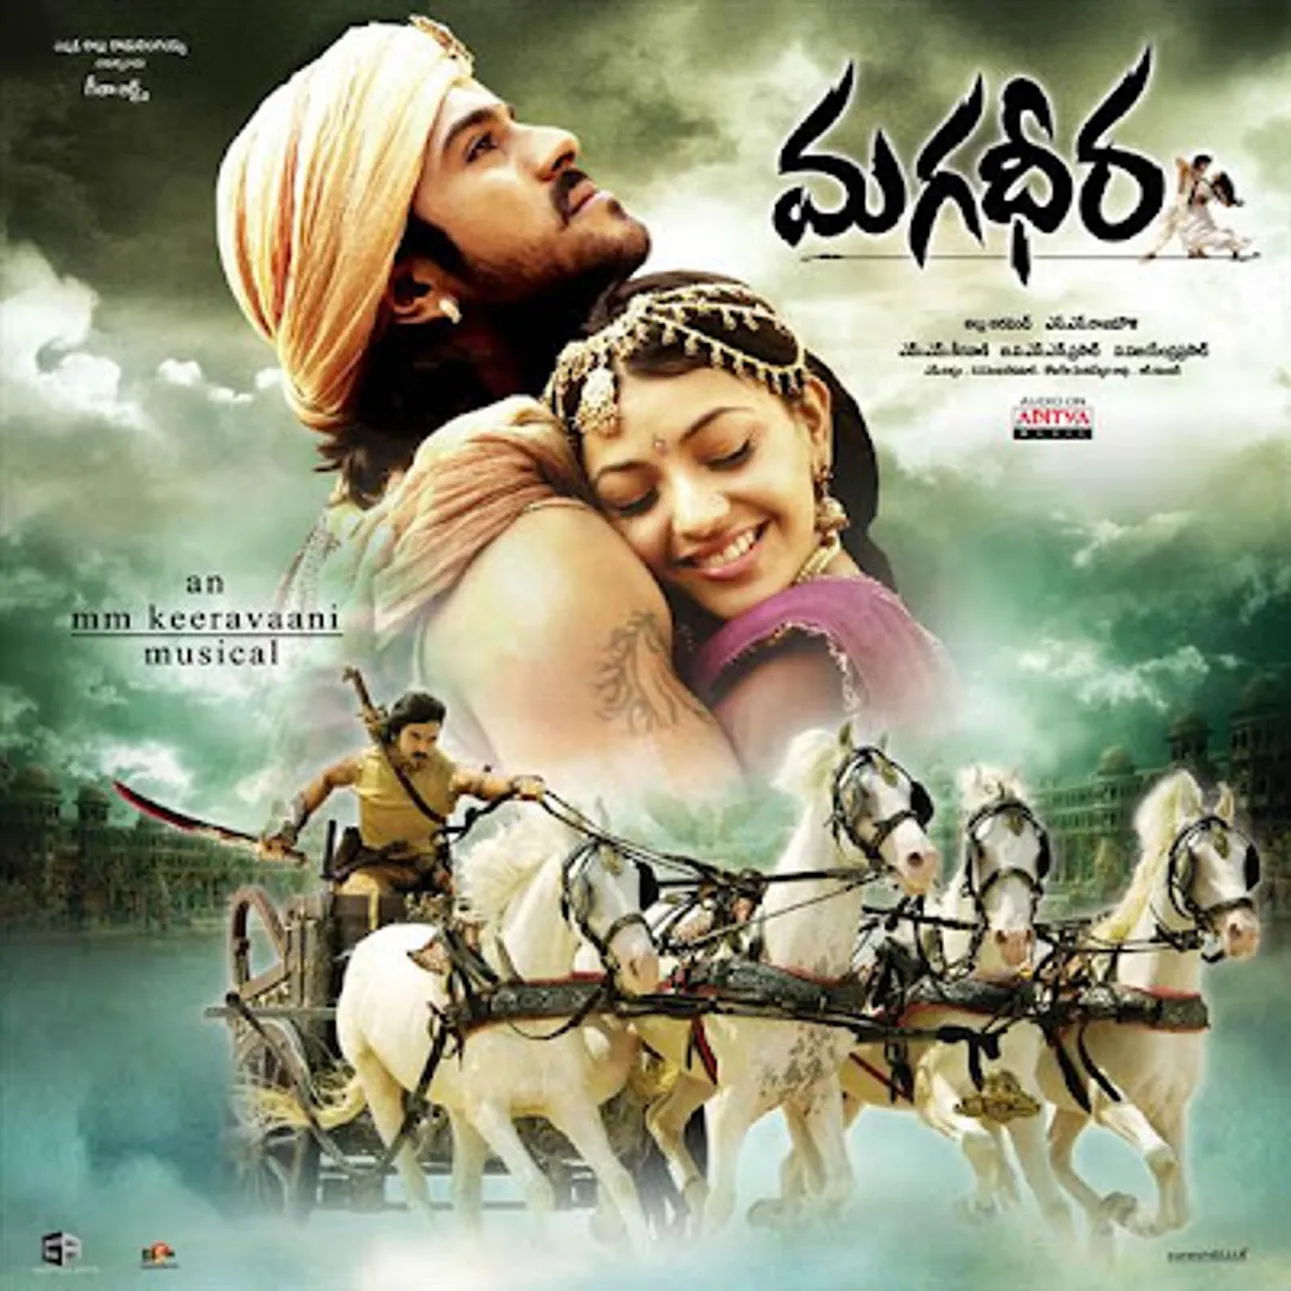 Magadheera: Telugu Movie Review | Waking Life in 24 Frames